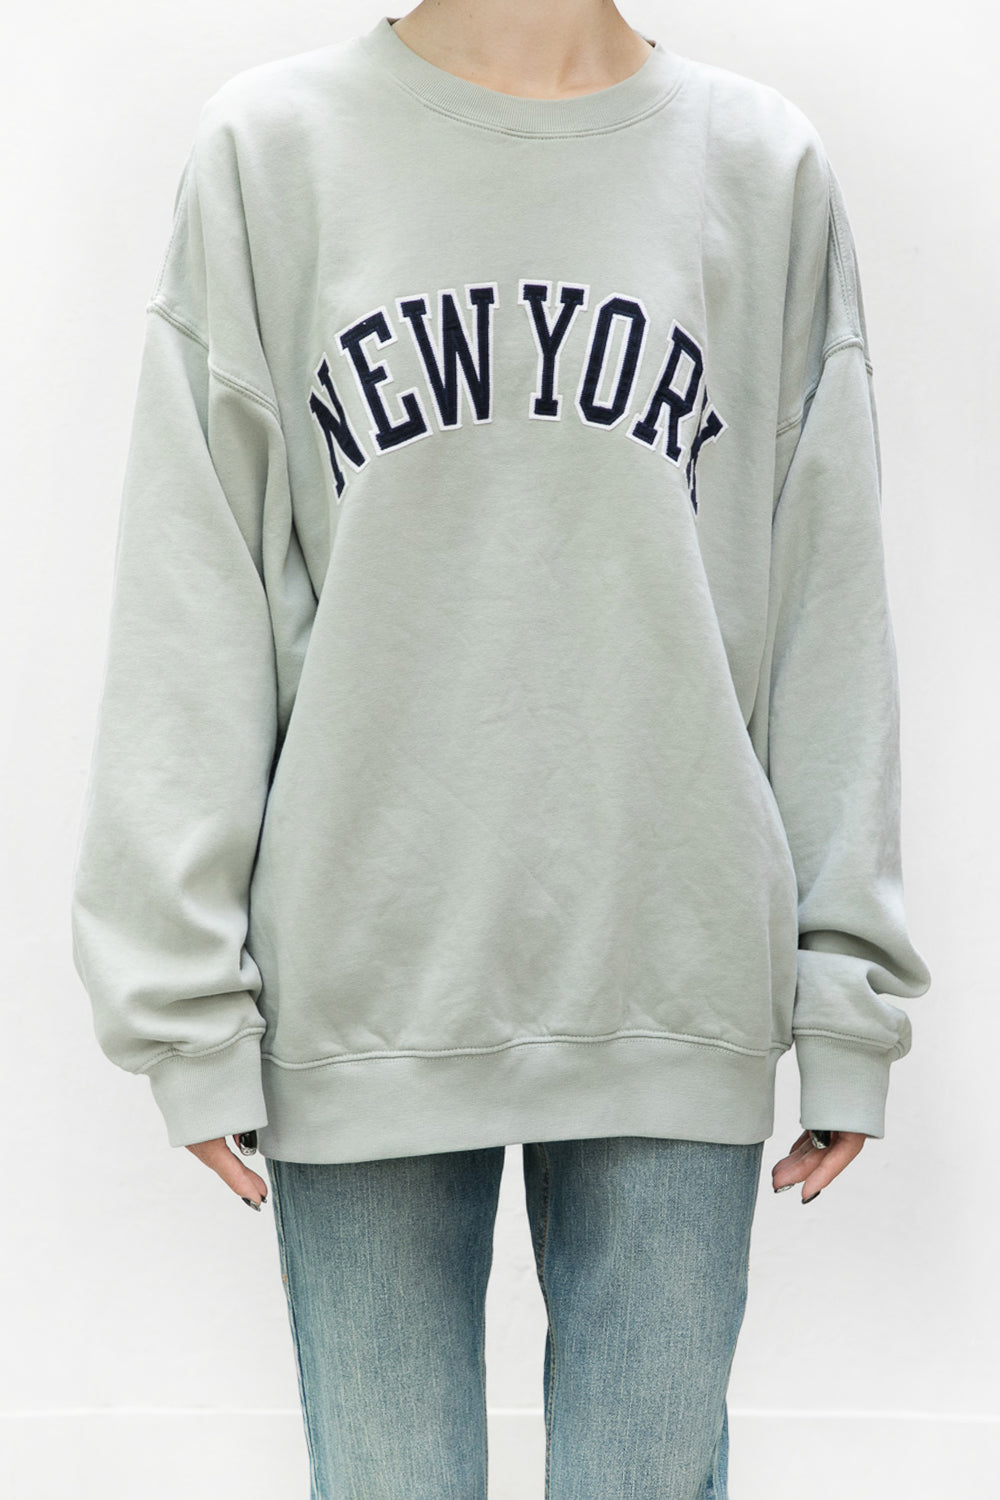 Erica New York Sweatshirt – Brandy Melville